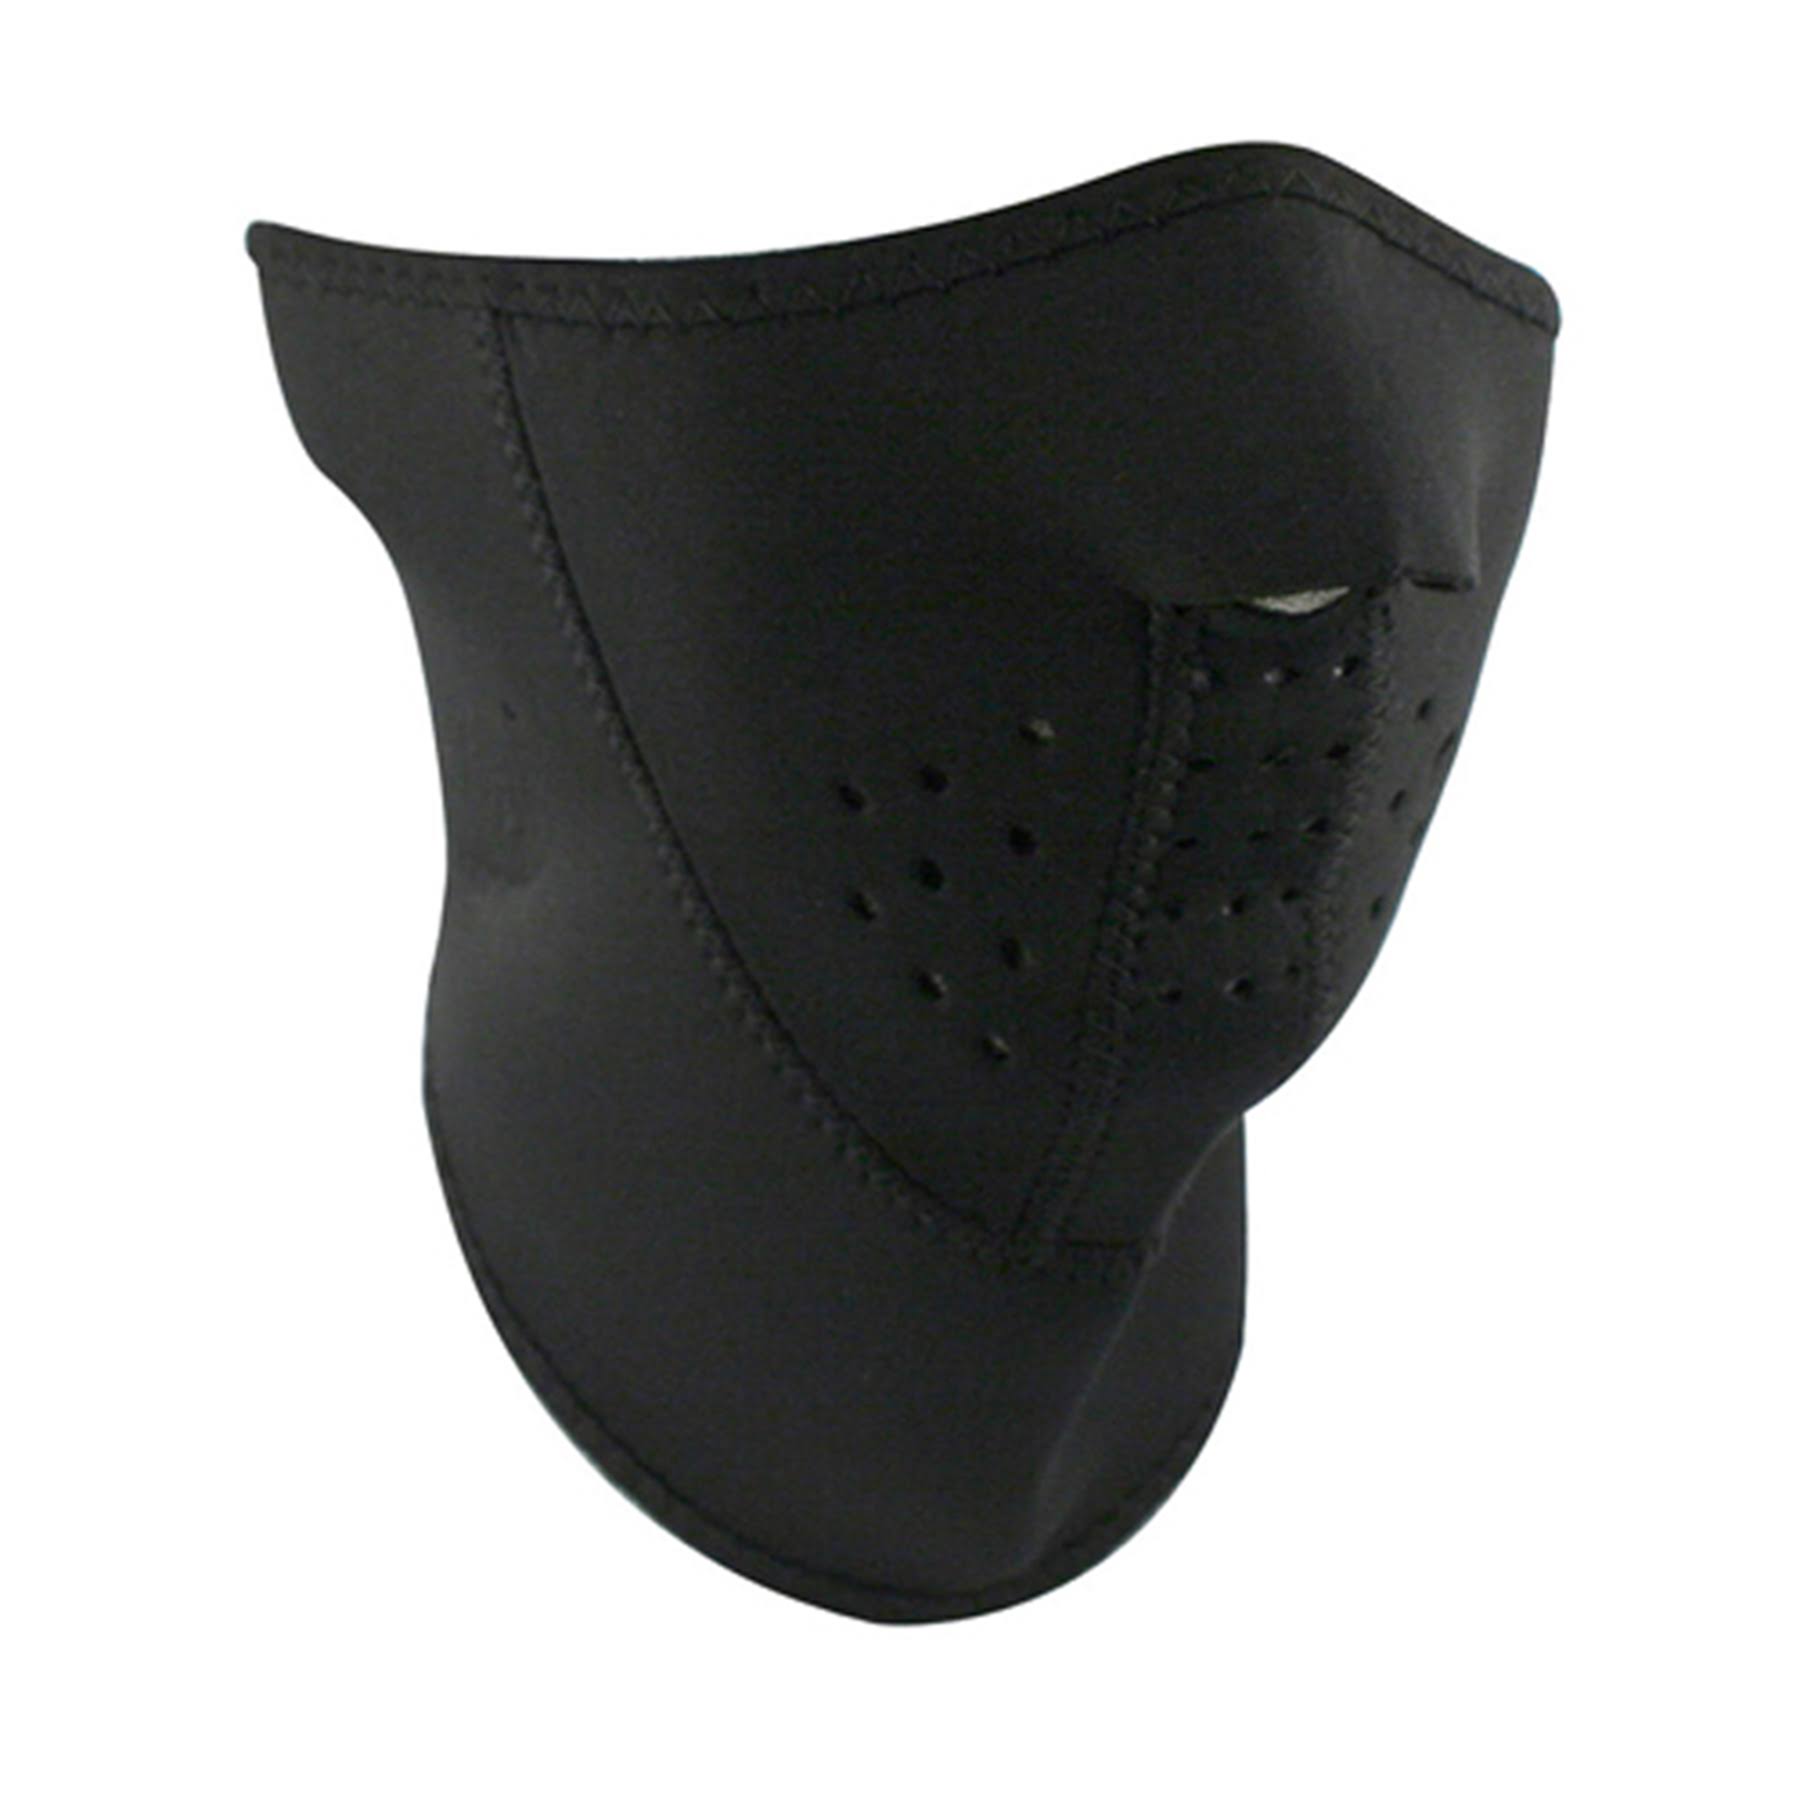 Zan Headgear 3-Panel Neoprene Half Face Mask - Black